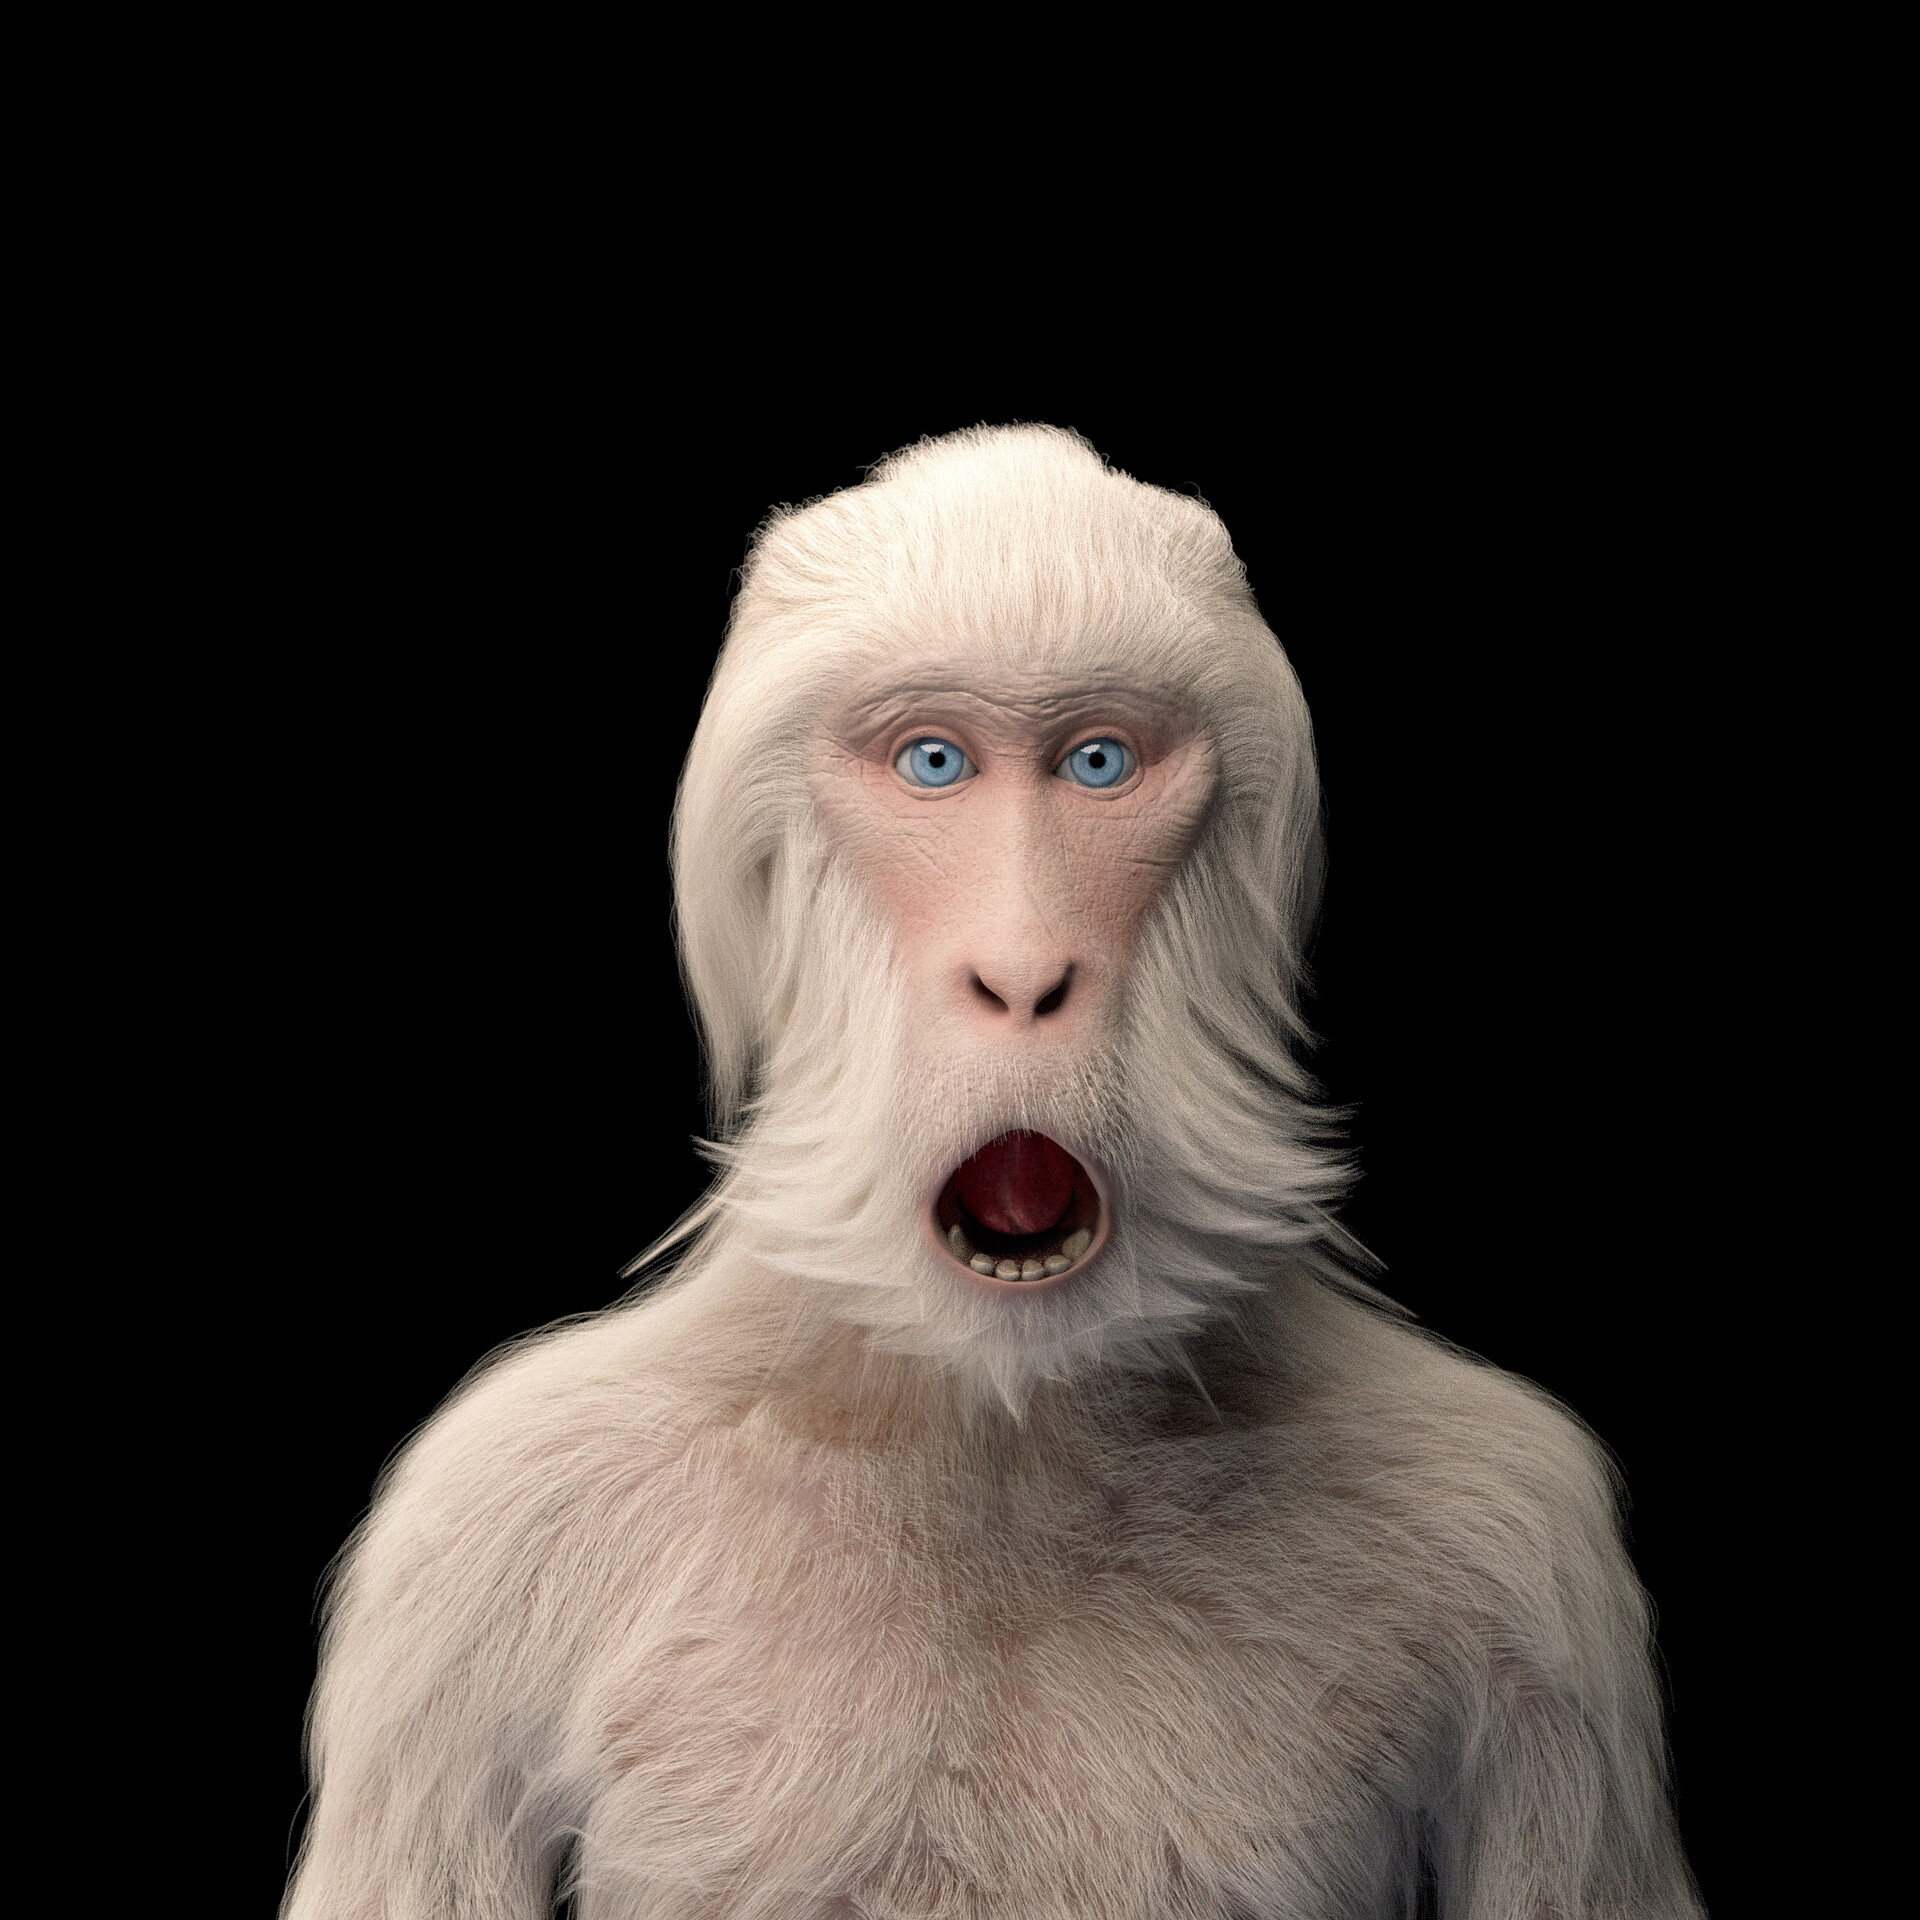 Premium AI Image  Albino monkey with white fur Portrait of a rare animal  primate on the background